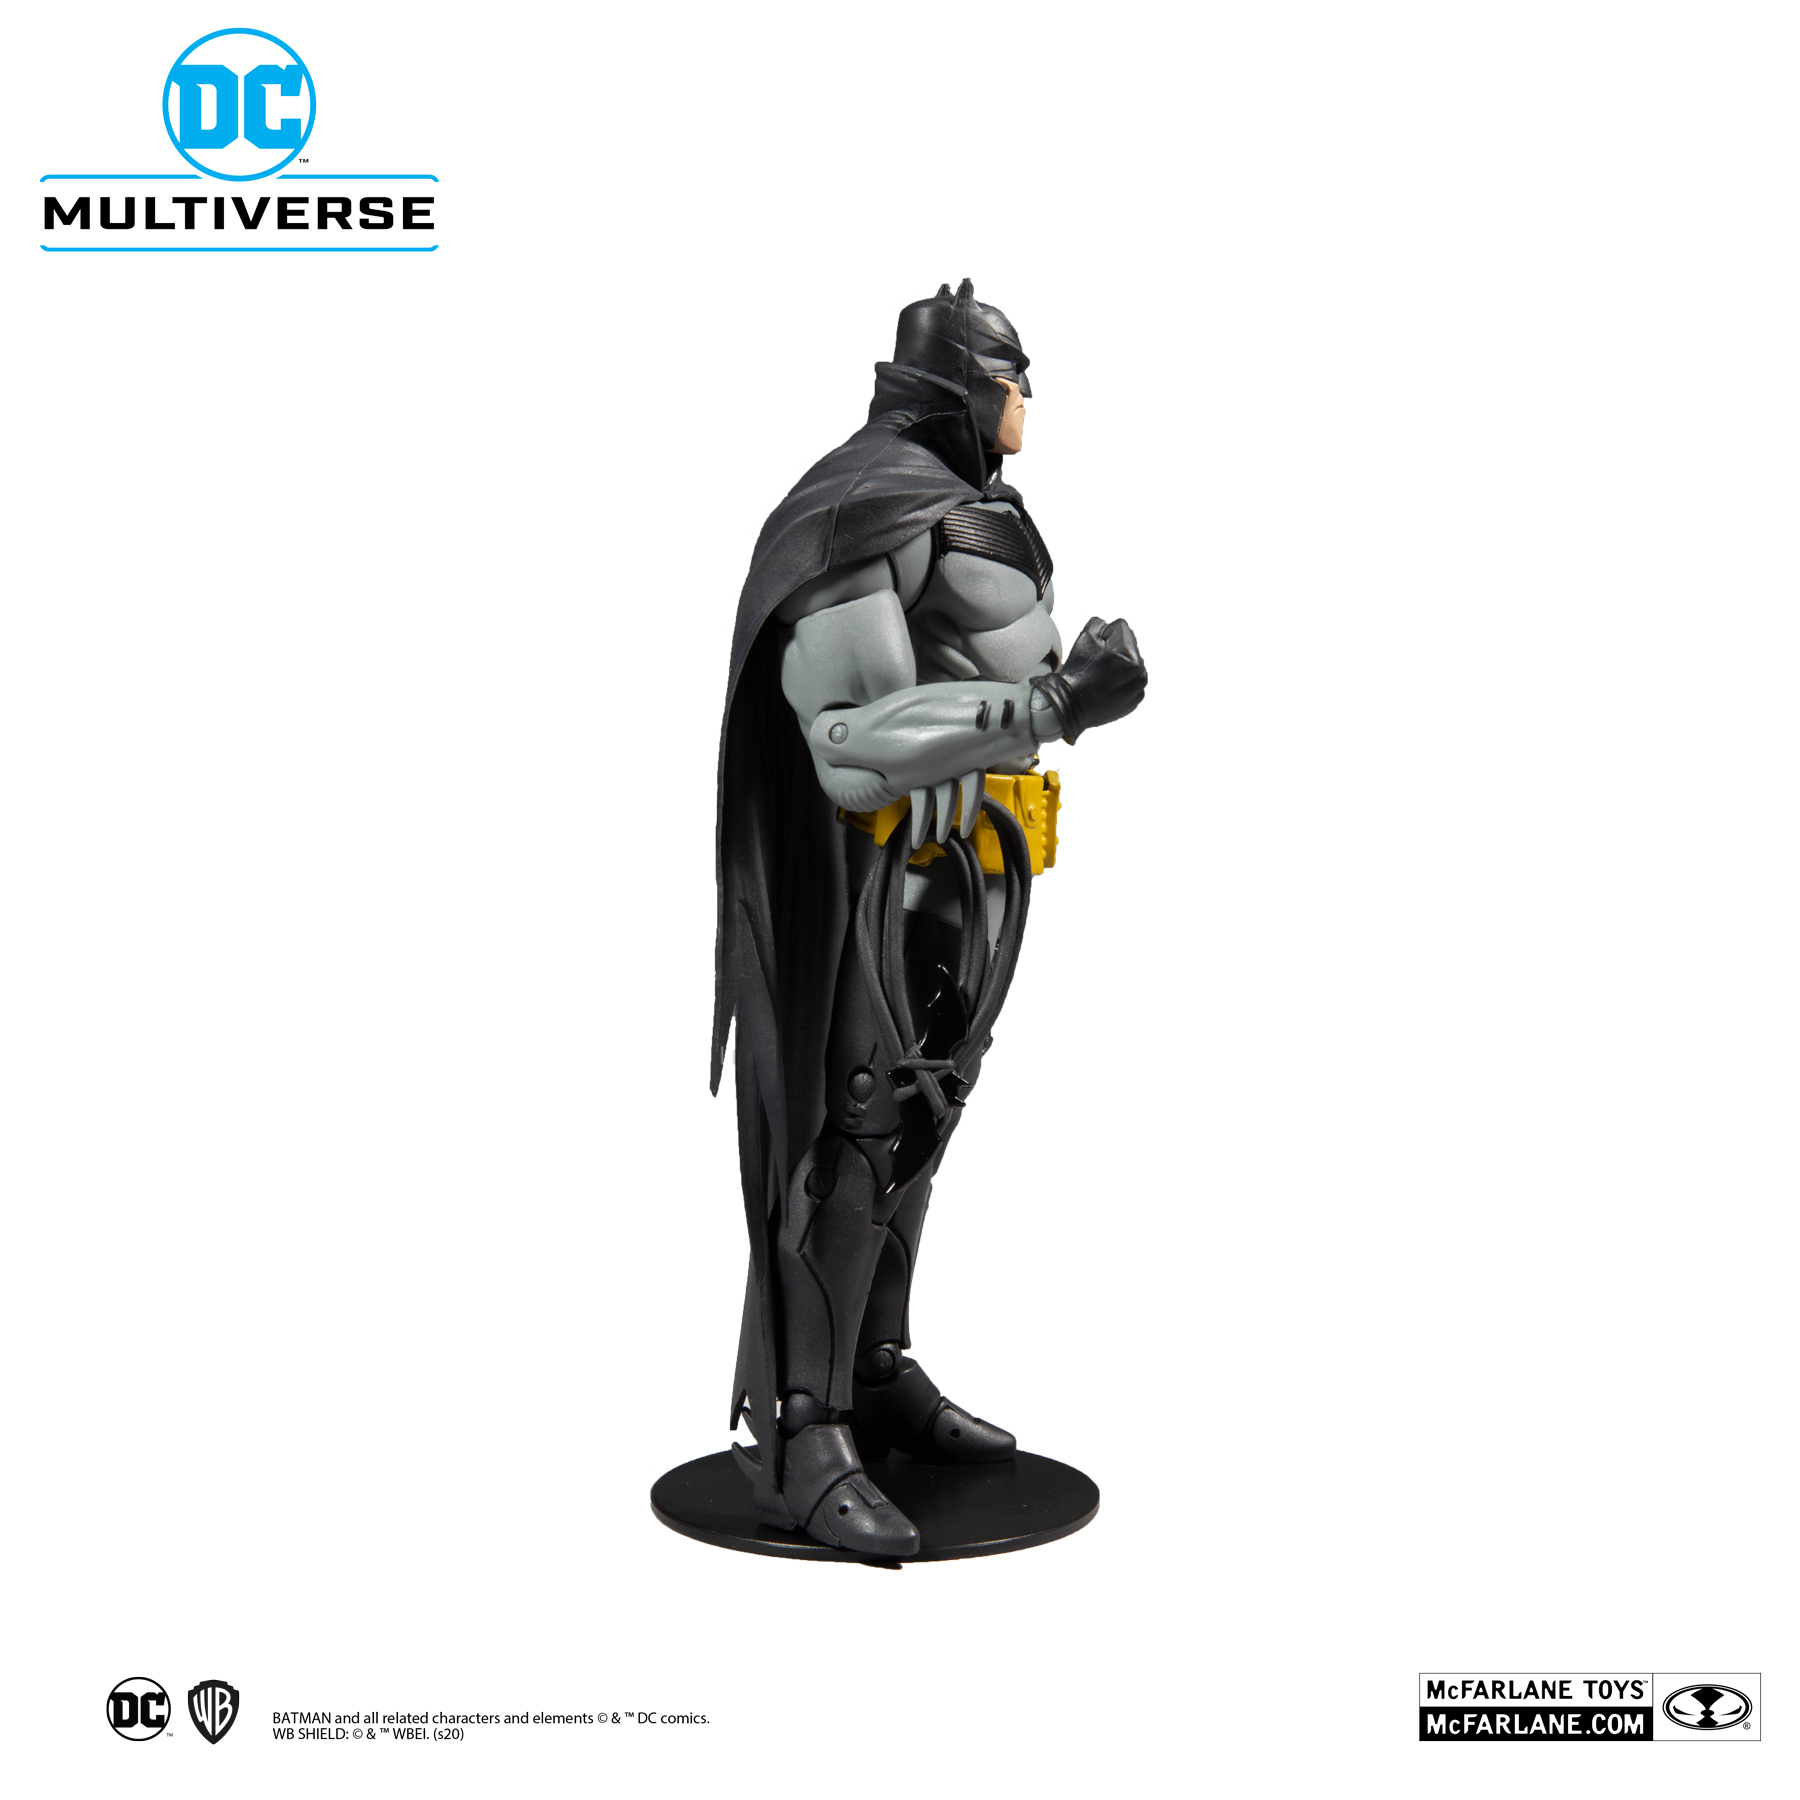 15406-1 for sale online White Knight 7 Inch Action Figure McFarlane Toys DC Multiverse Batman